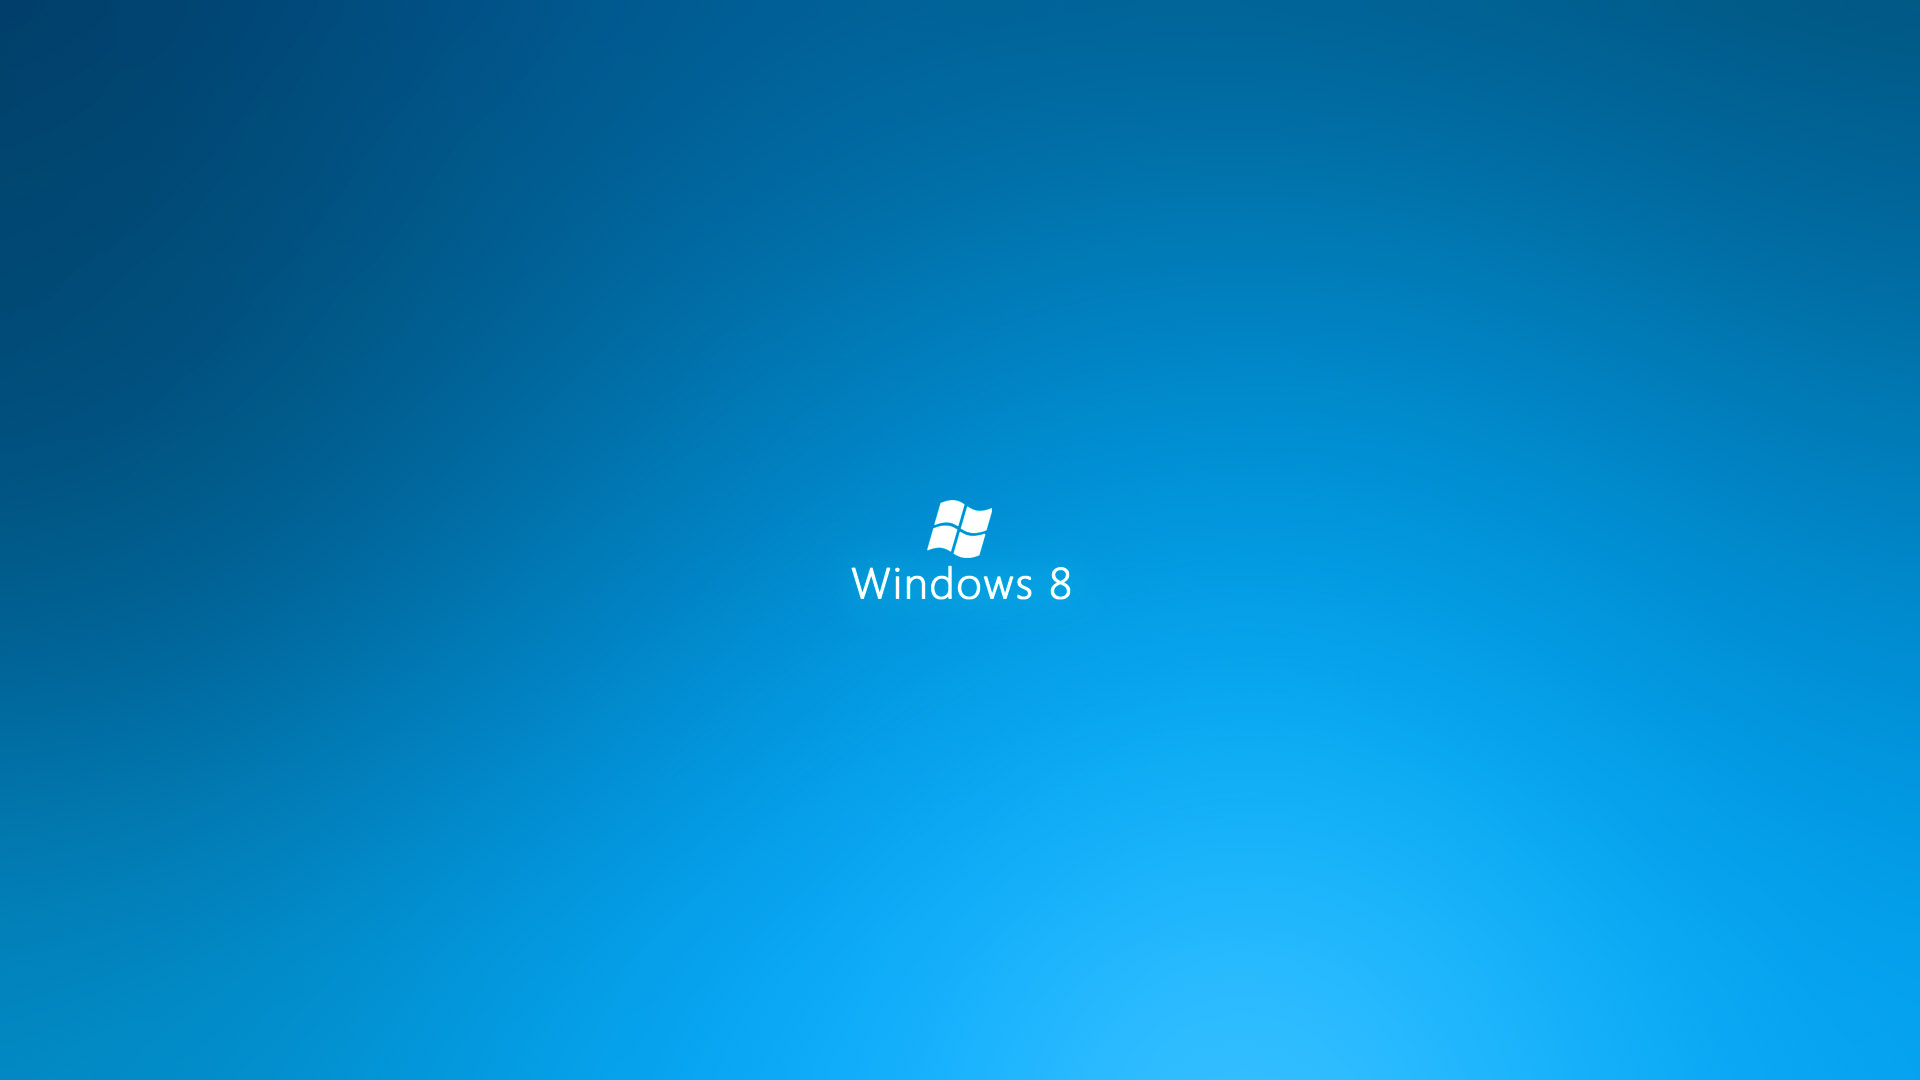 Clear Blue Windows 8 1920x1080 HD Image Computers Windows 8